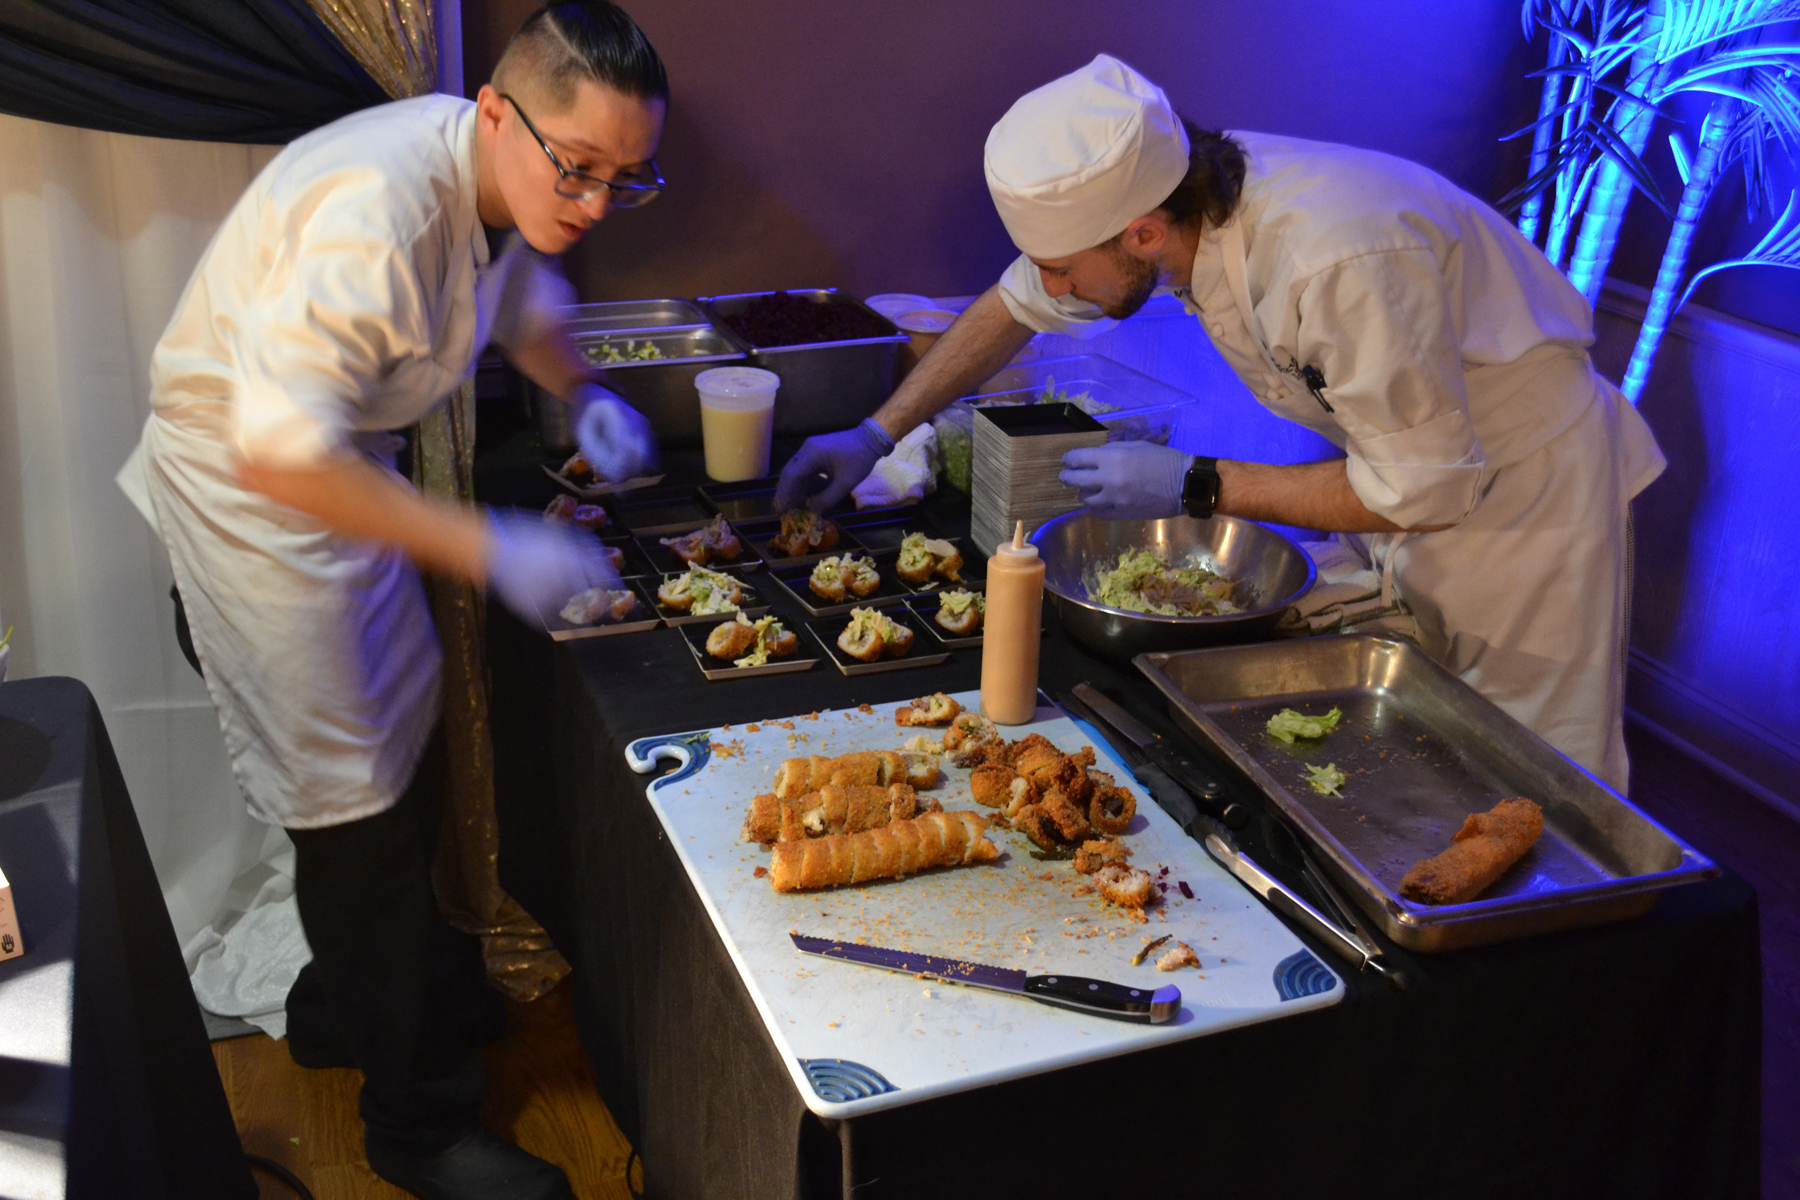 Guest Chef Cody Nguyen and Culinary Arts major Michael Keenan preparing cuisine